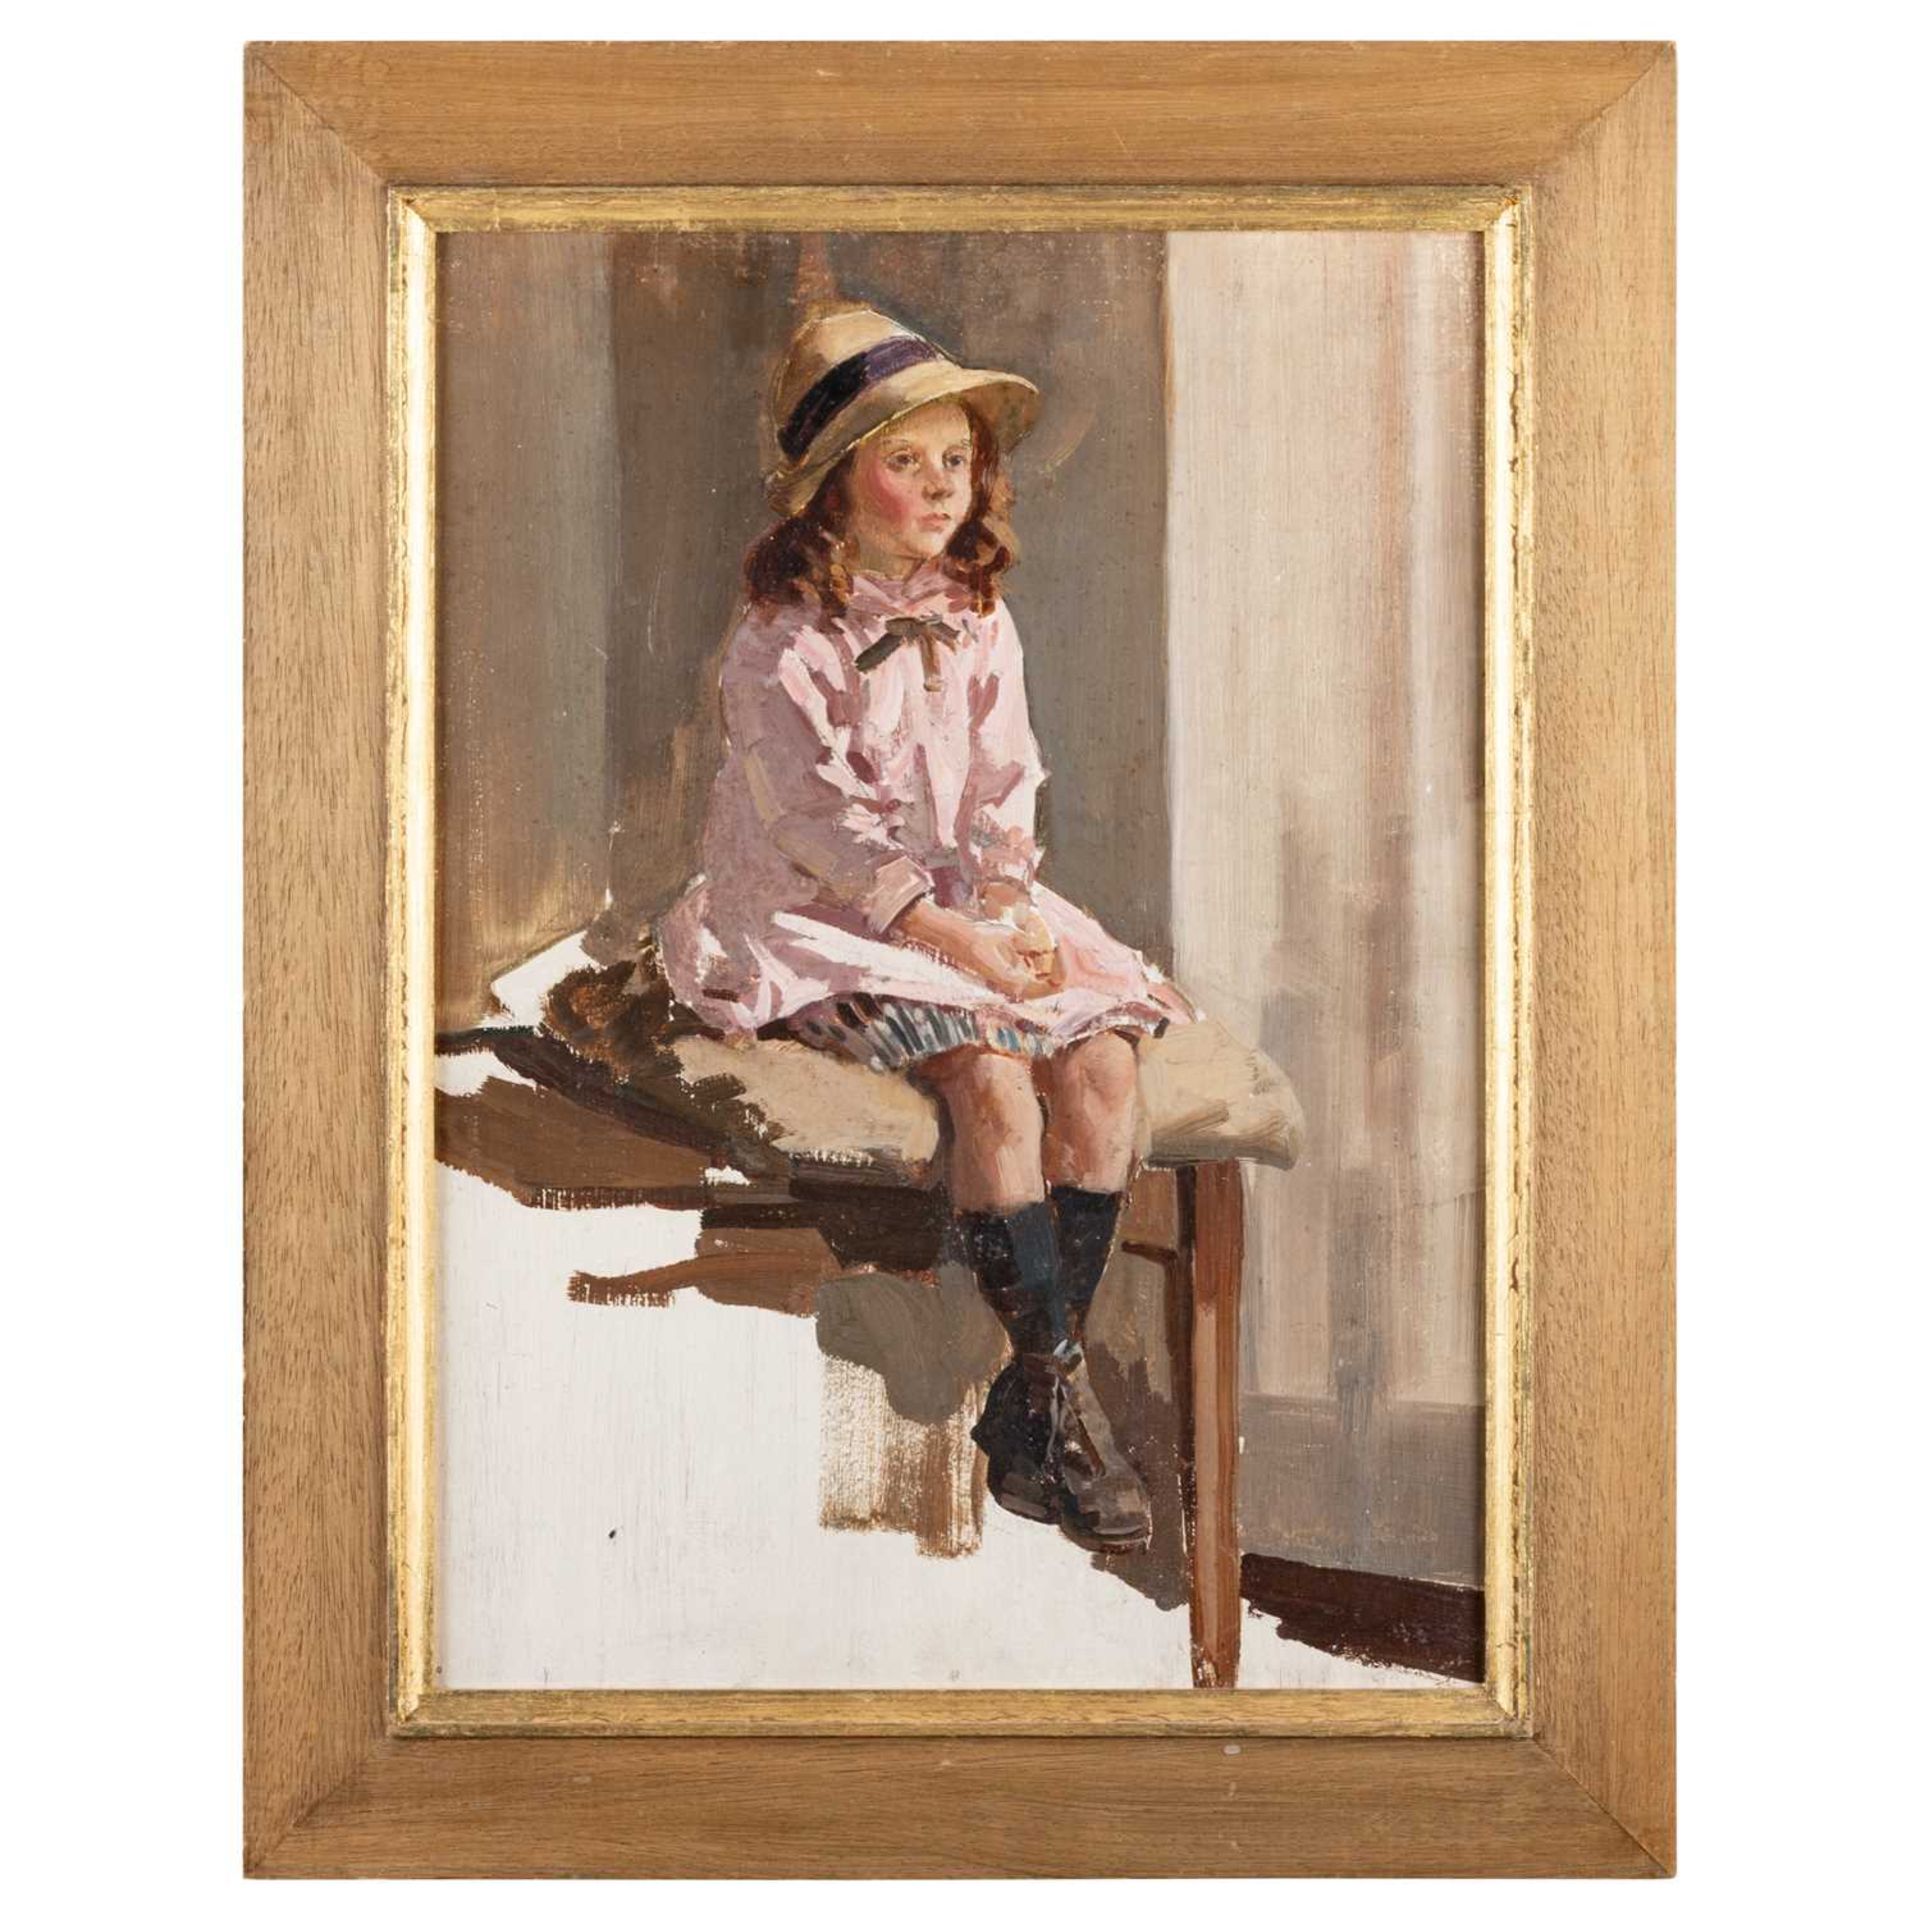 HARRY WATSON (1871-1936) PORTRAIT SKETCH OF A GIRL - Image 2 of 2